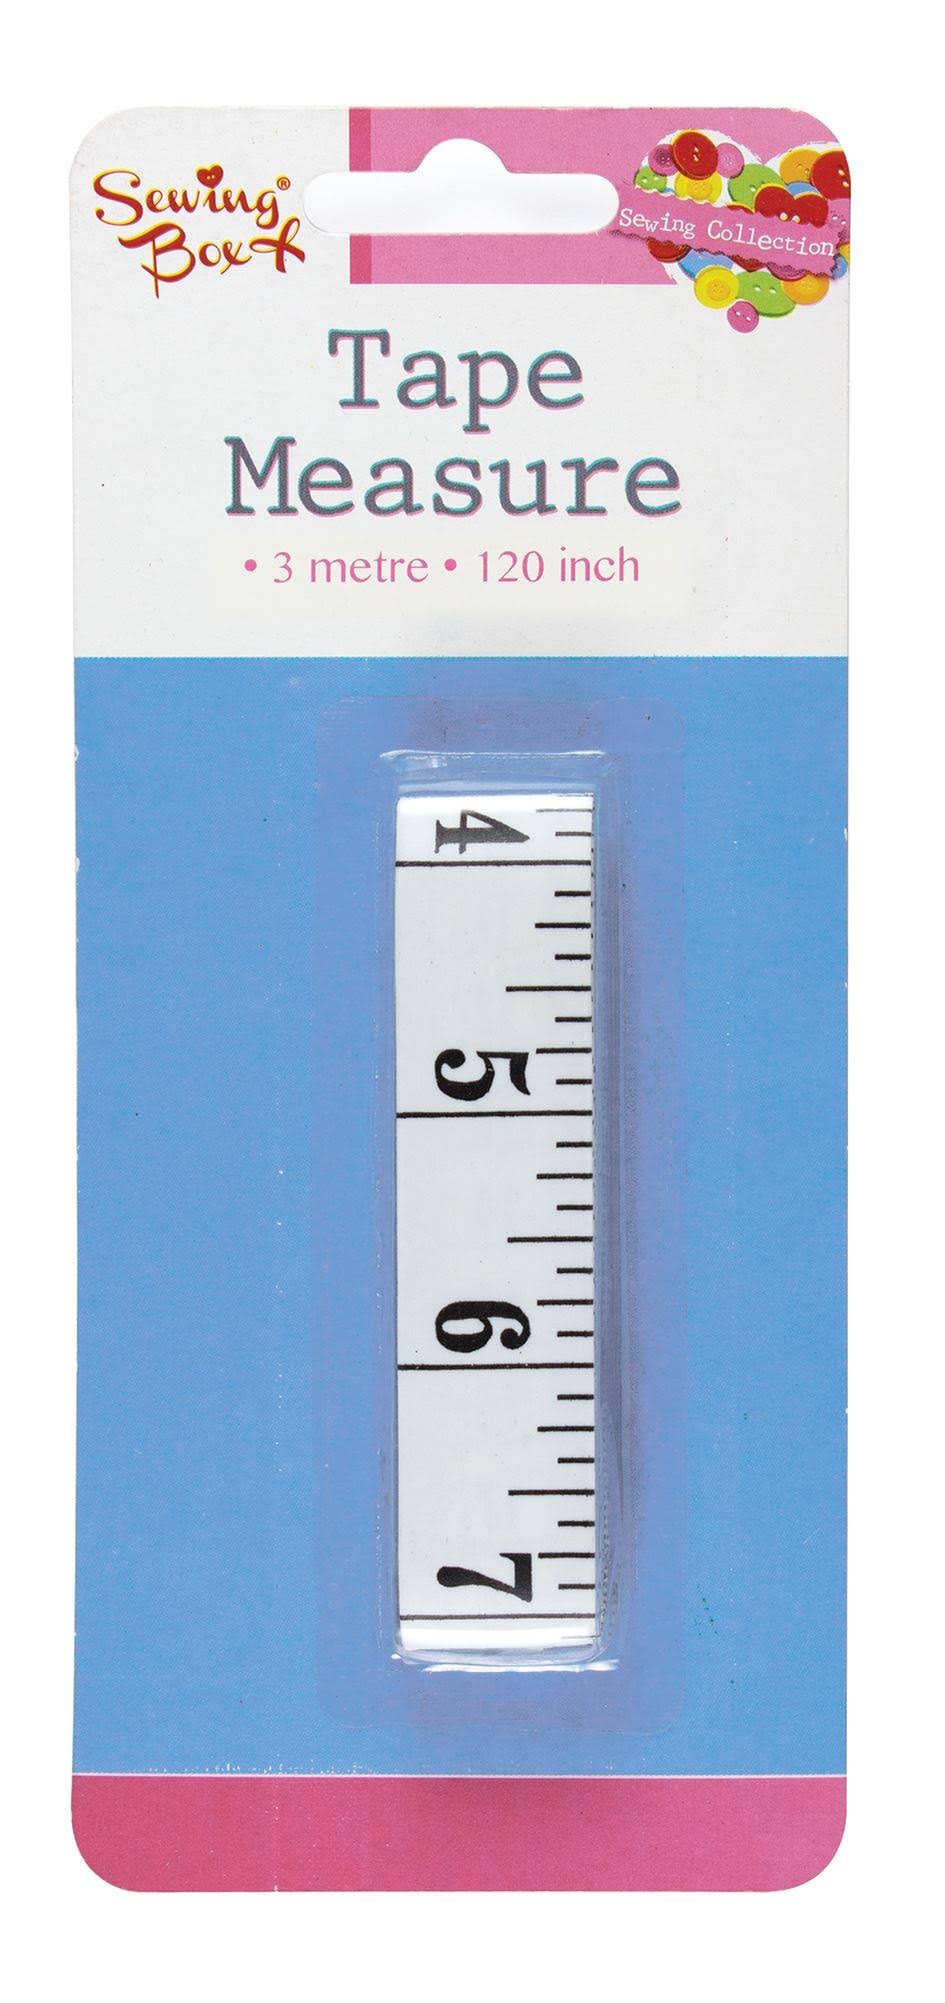 Sewing Tape Measure - 120in Long